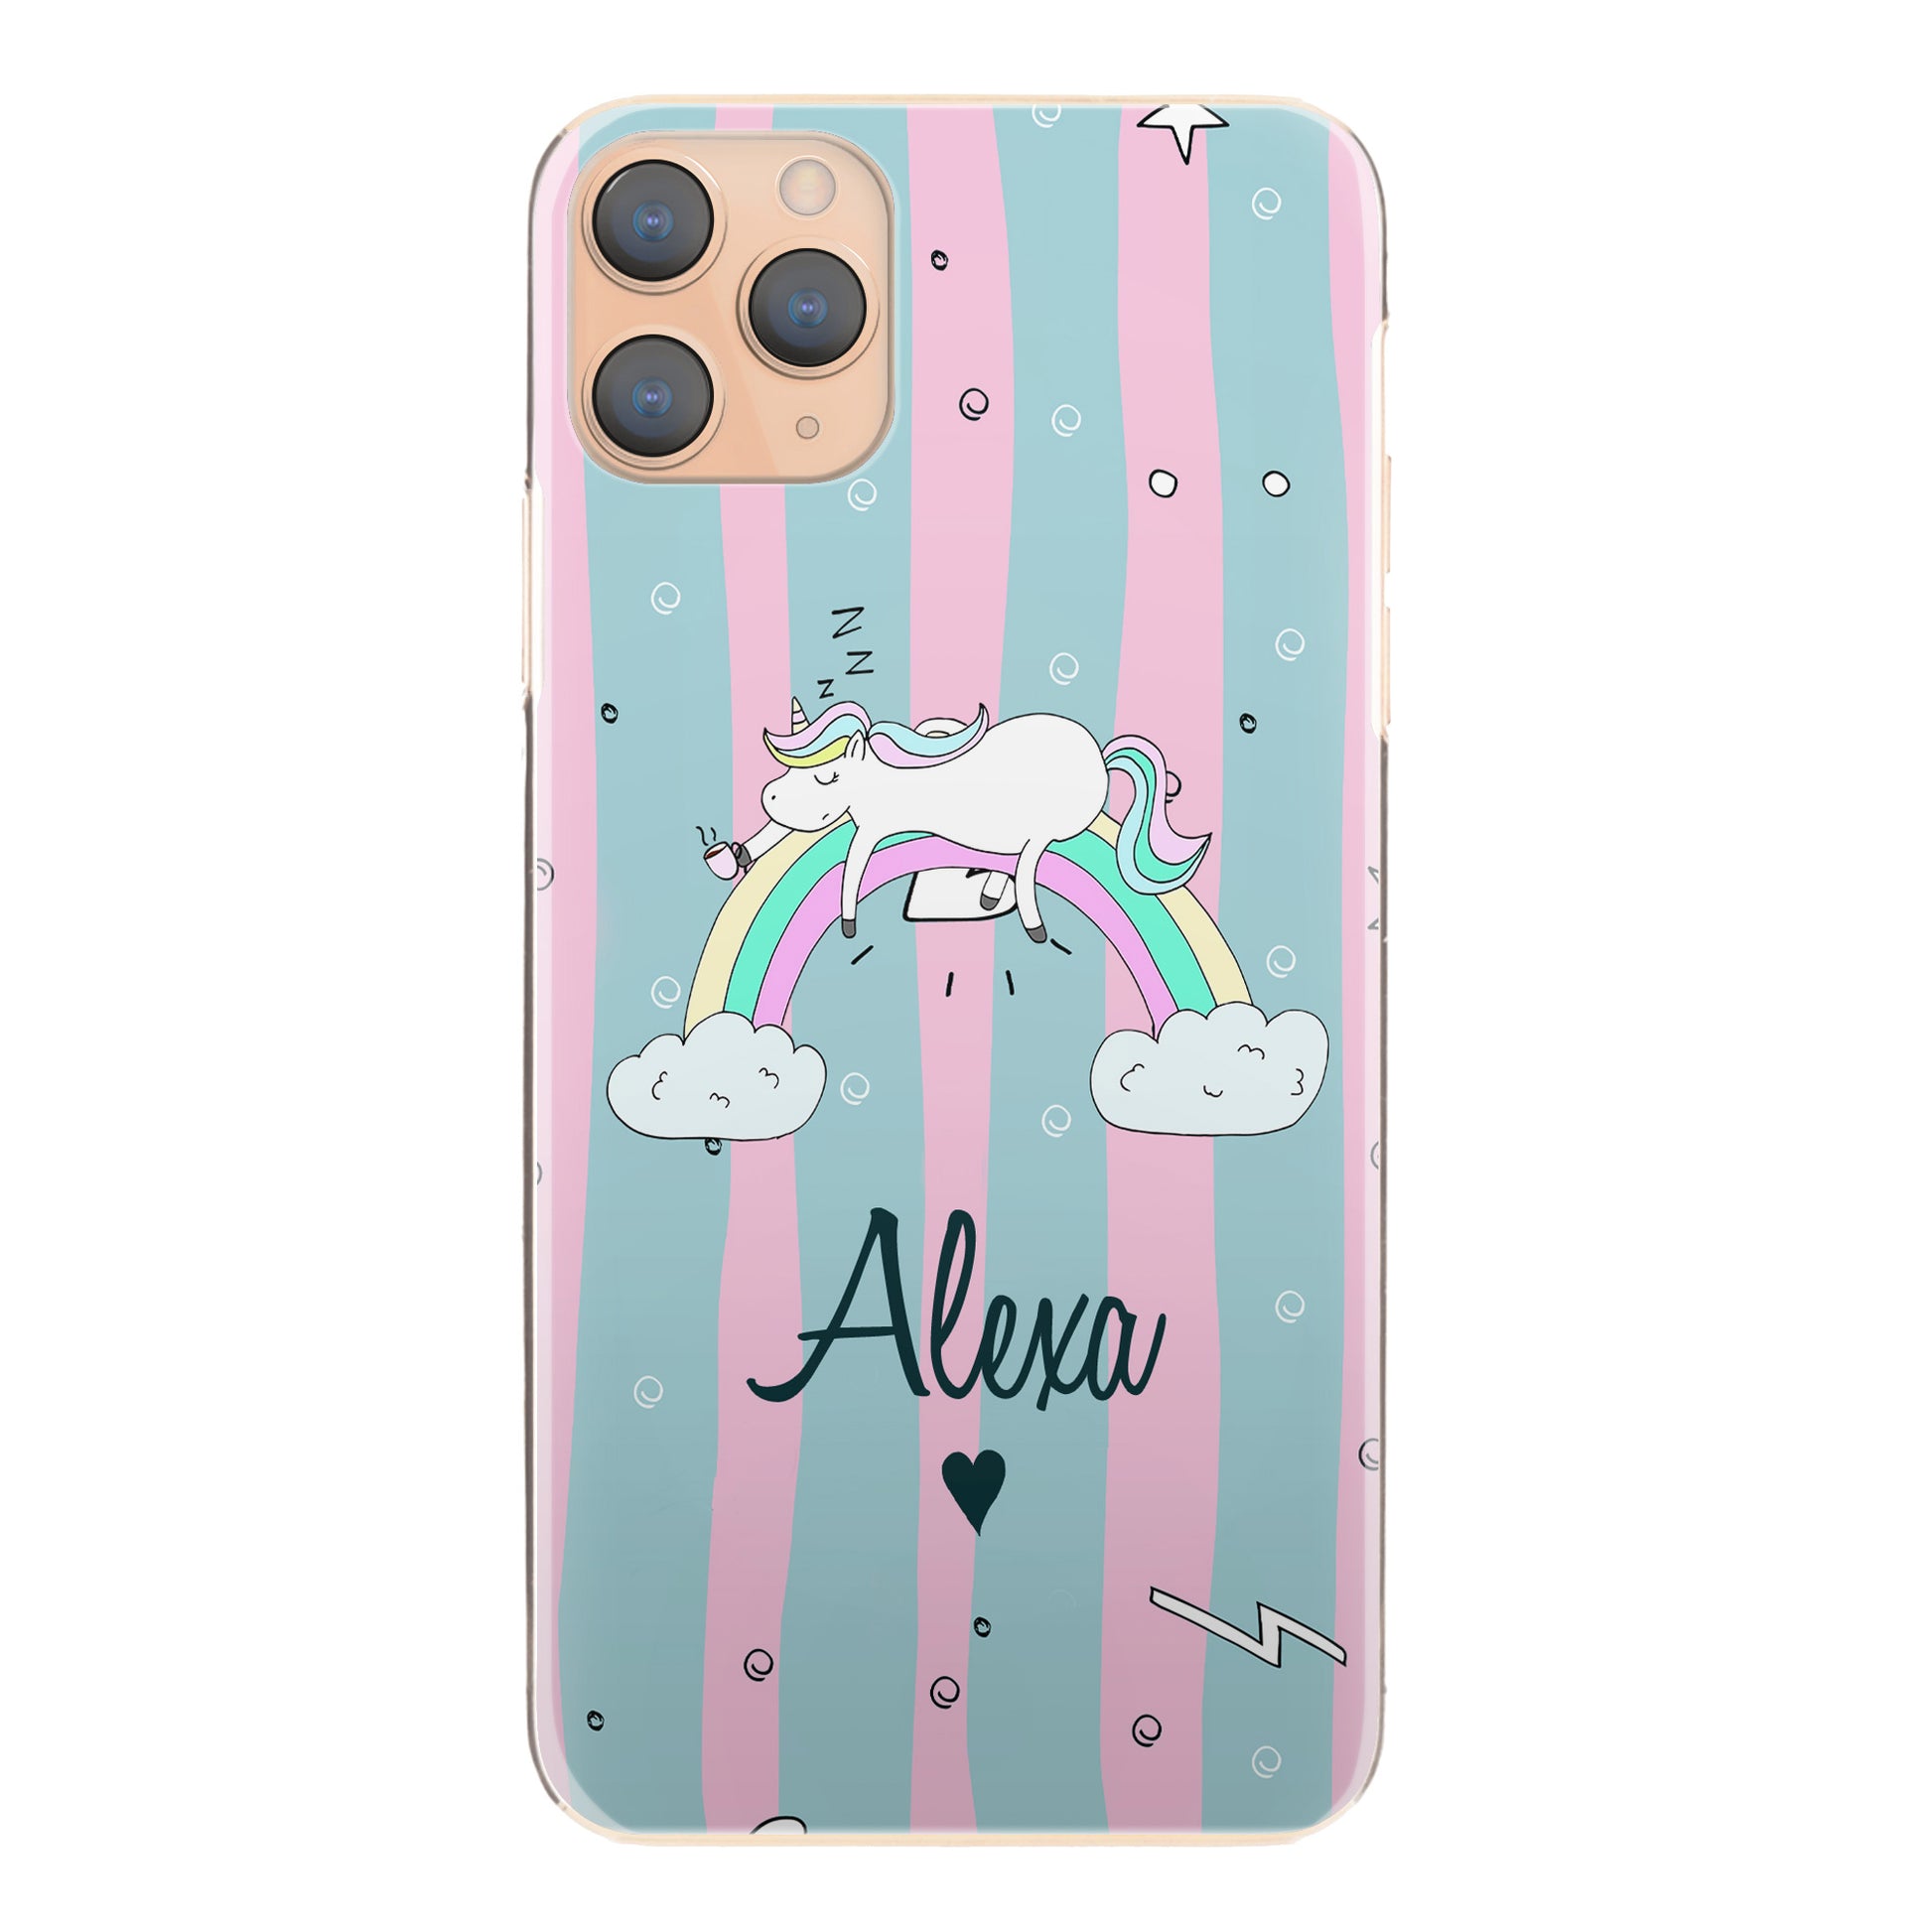 Personalised Honor Phone Hard Case with Sleeping Unicorn and Rainbow on Cartoon Stripes